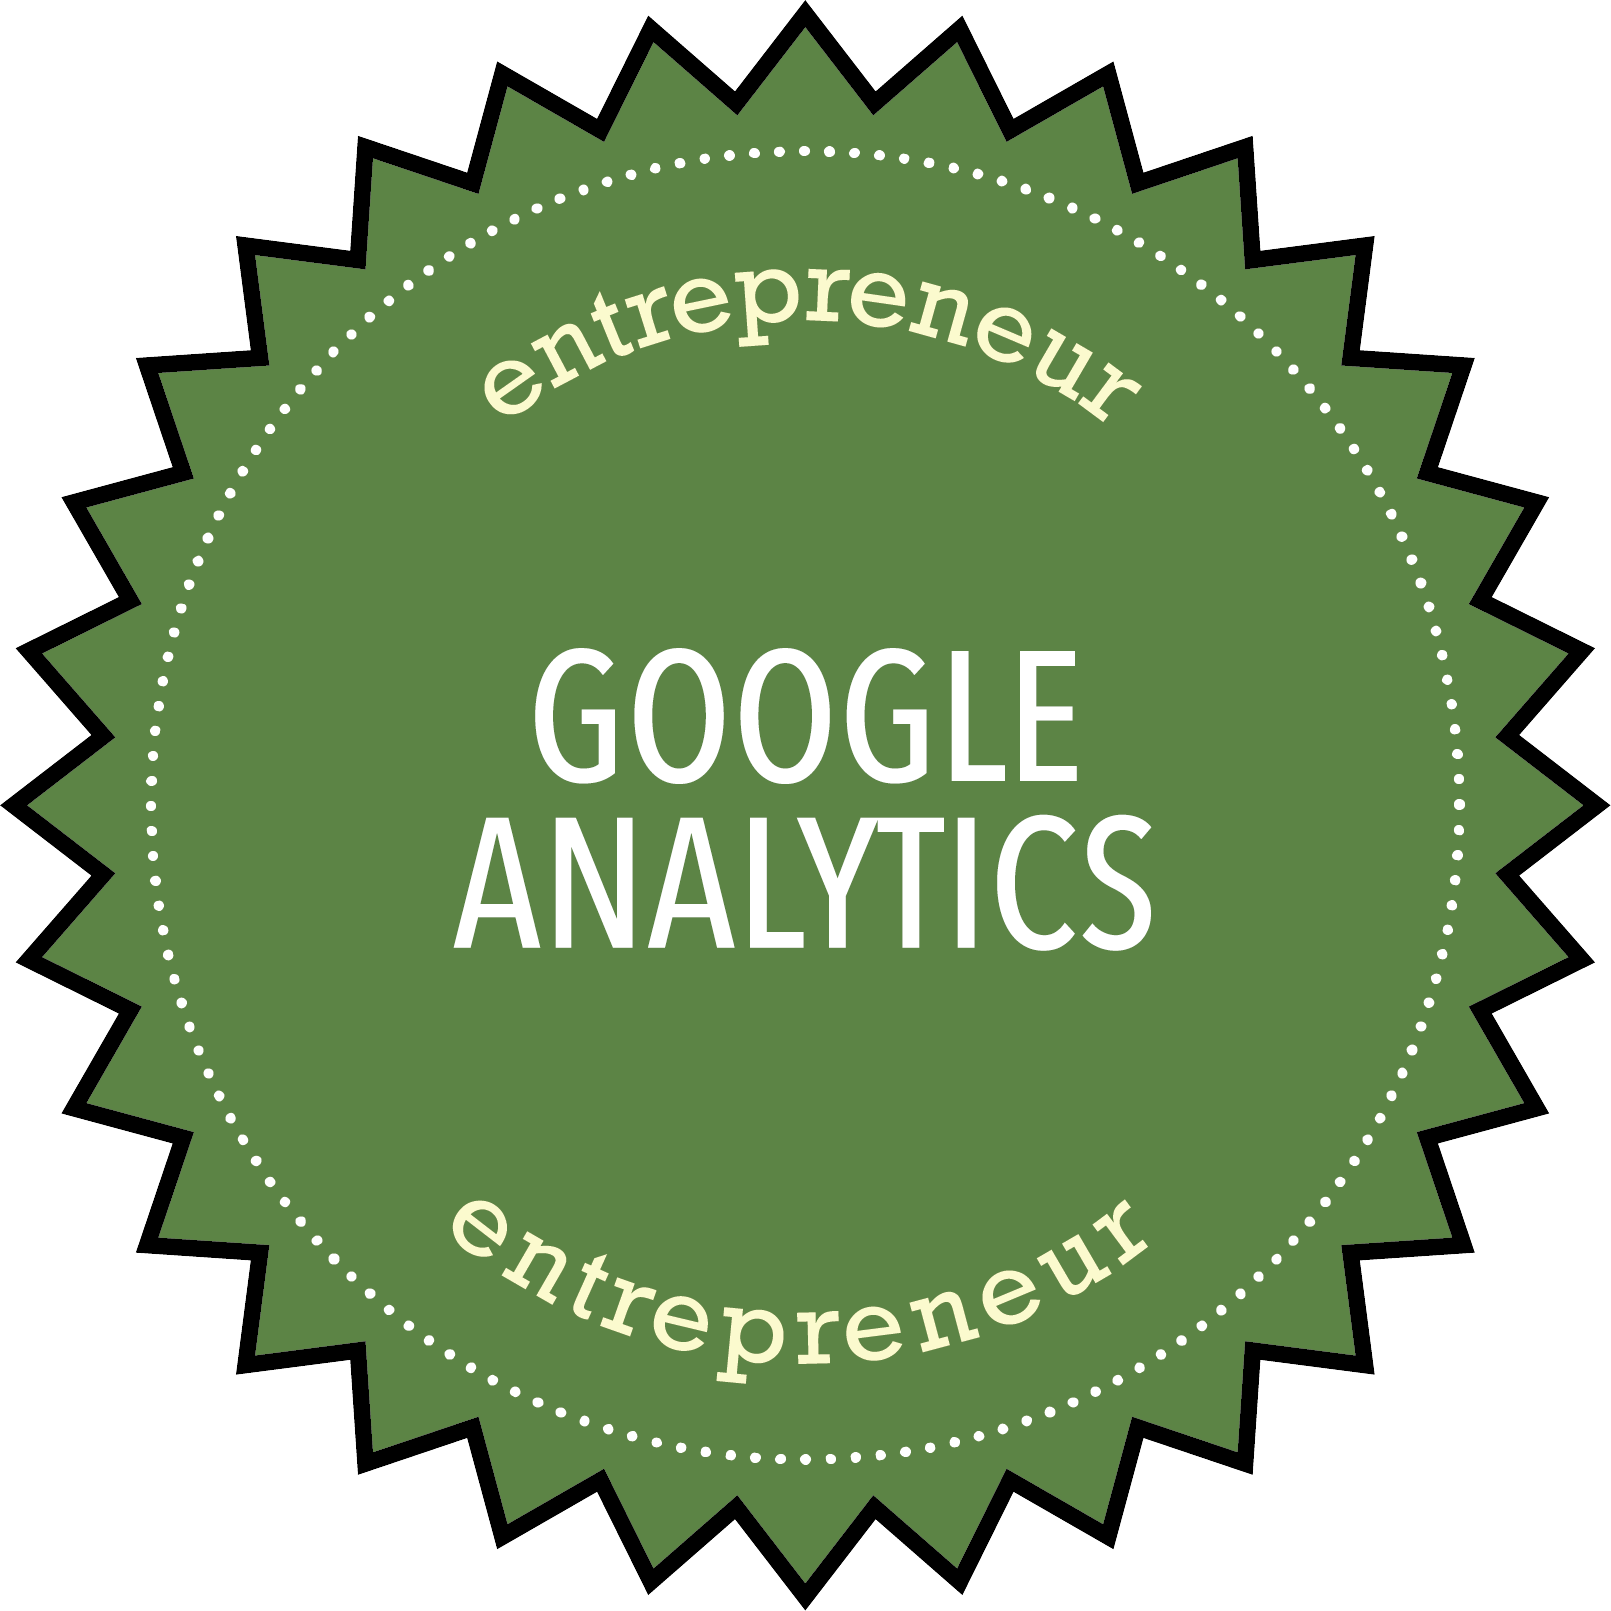 Entrepreneur Google Analytics